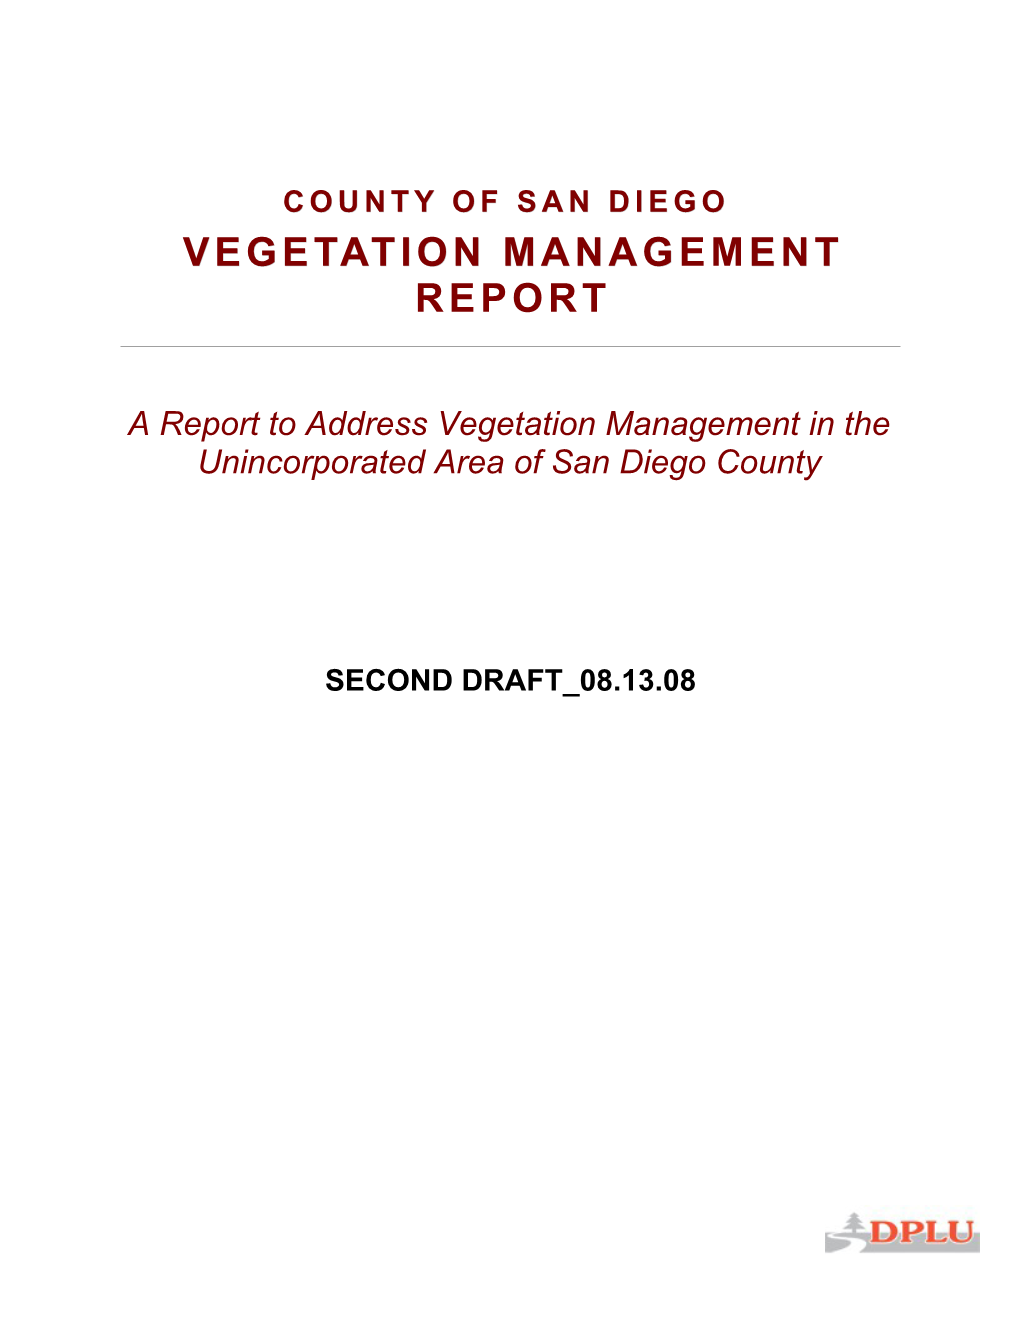 Vegetation Management REPORT